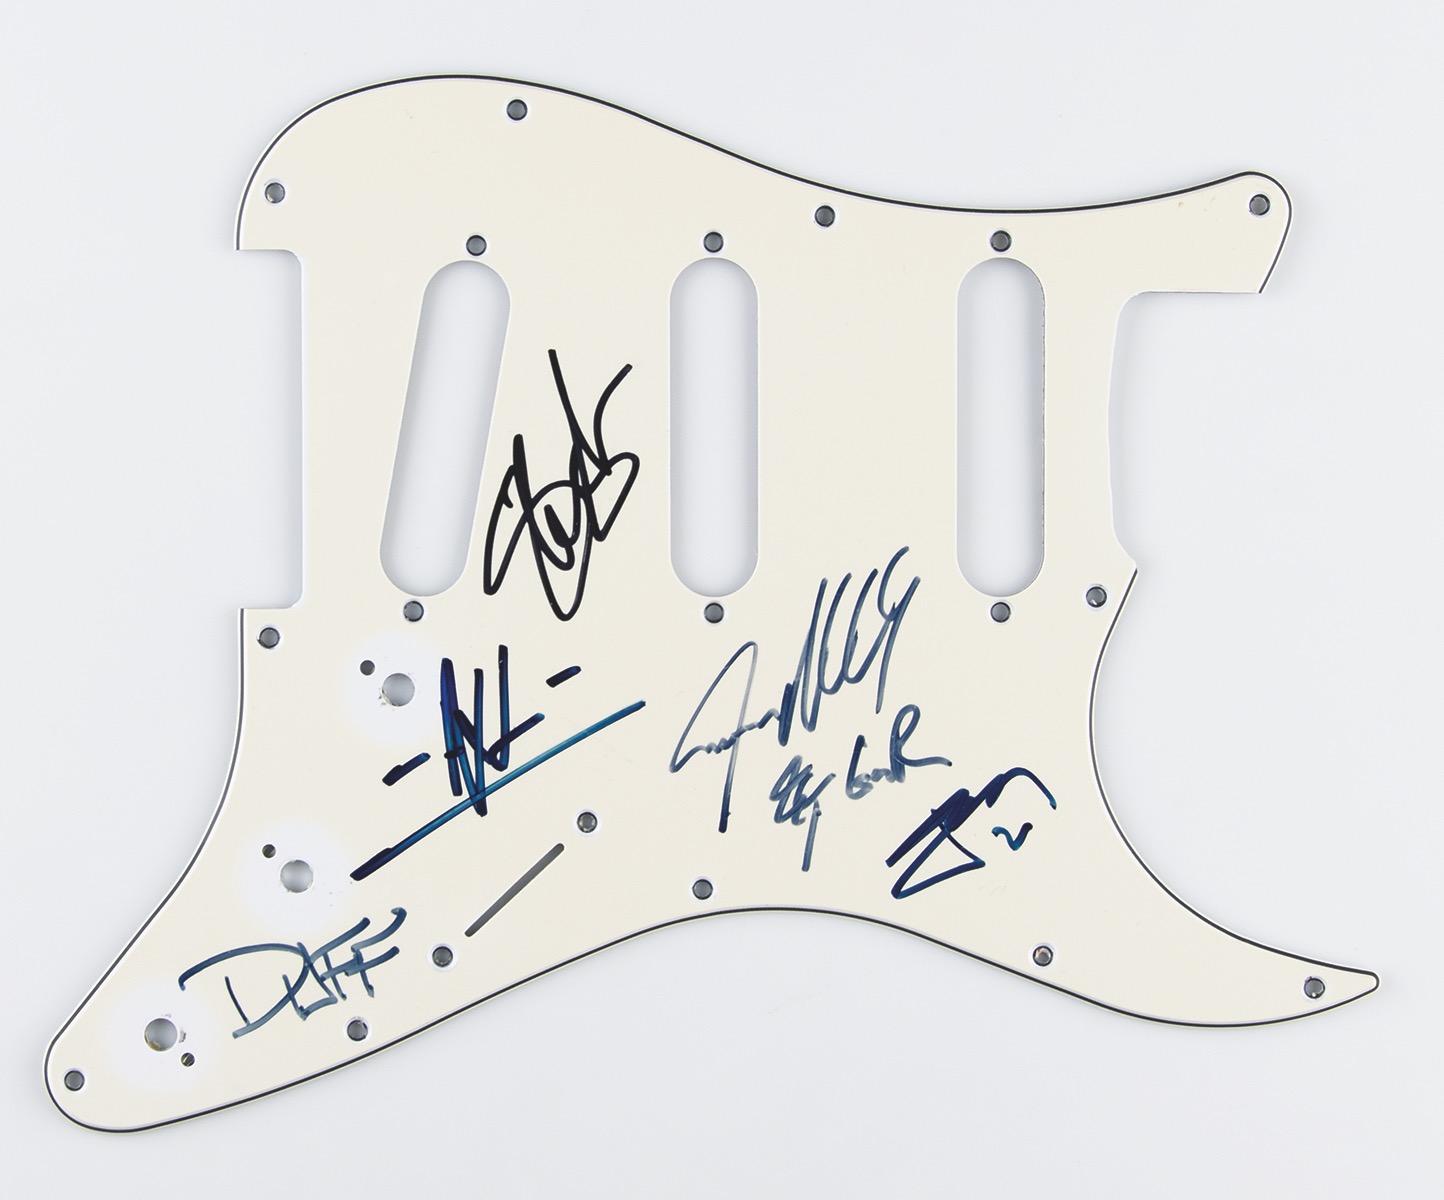 Lot #478 Guns N' Roses Signed Pickguard - Image 1